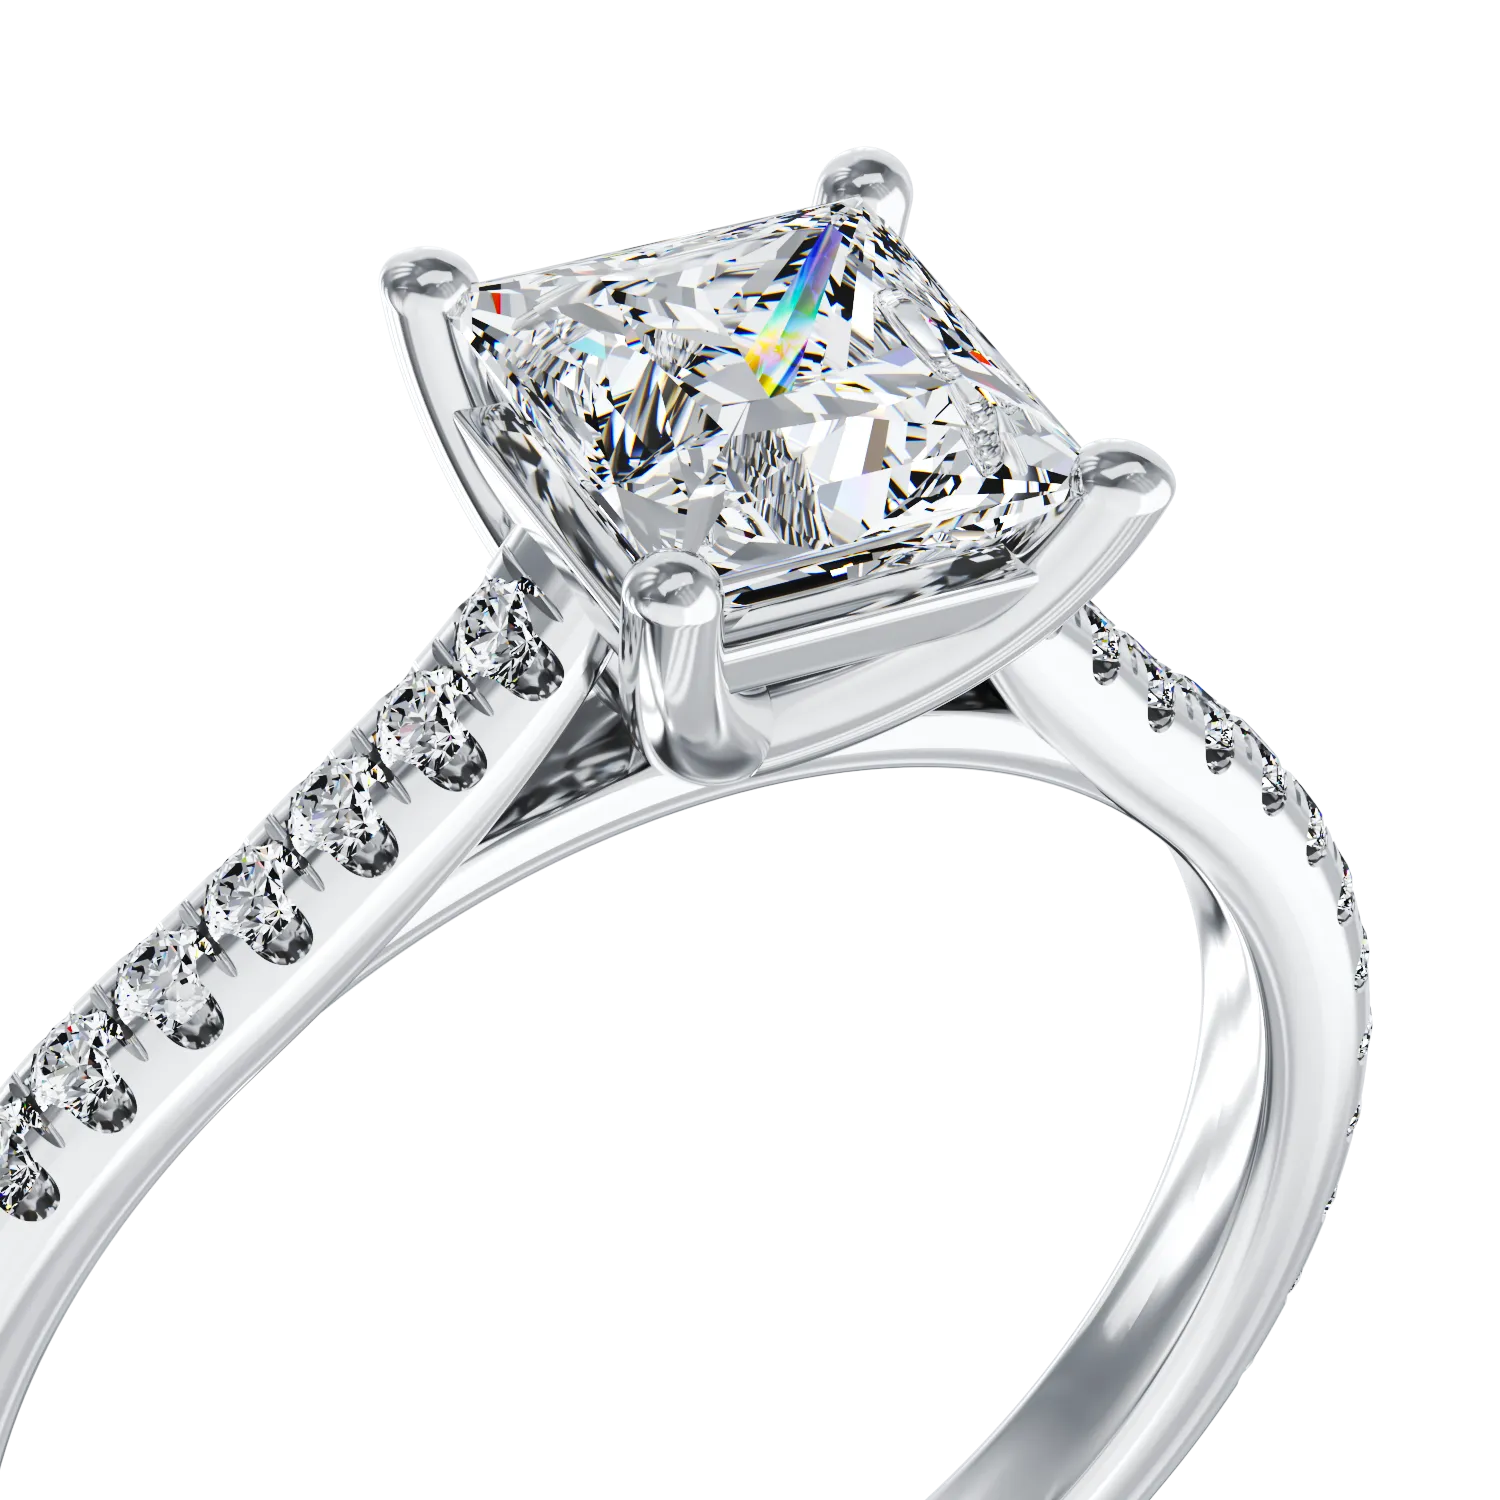 Diamond platinum engagement ring with 1ct diamond and 0.254ct diamonds